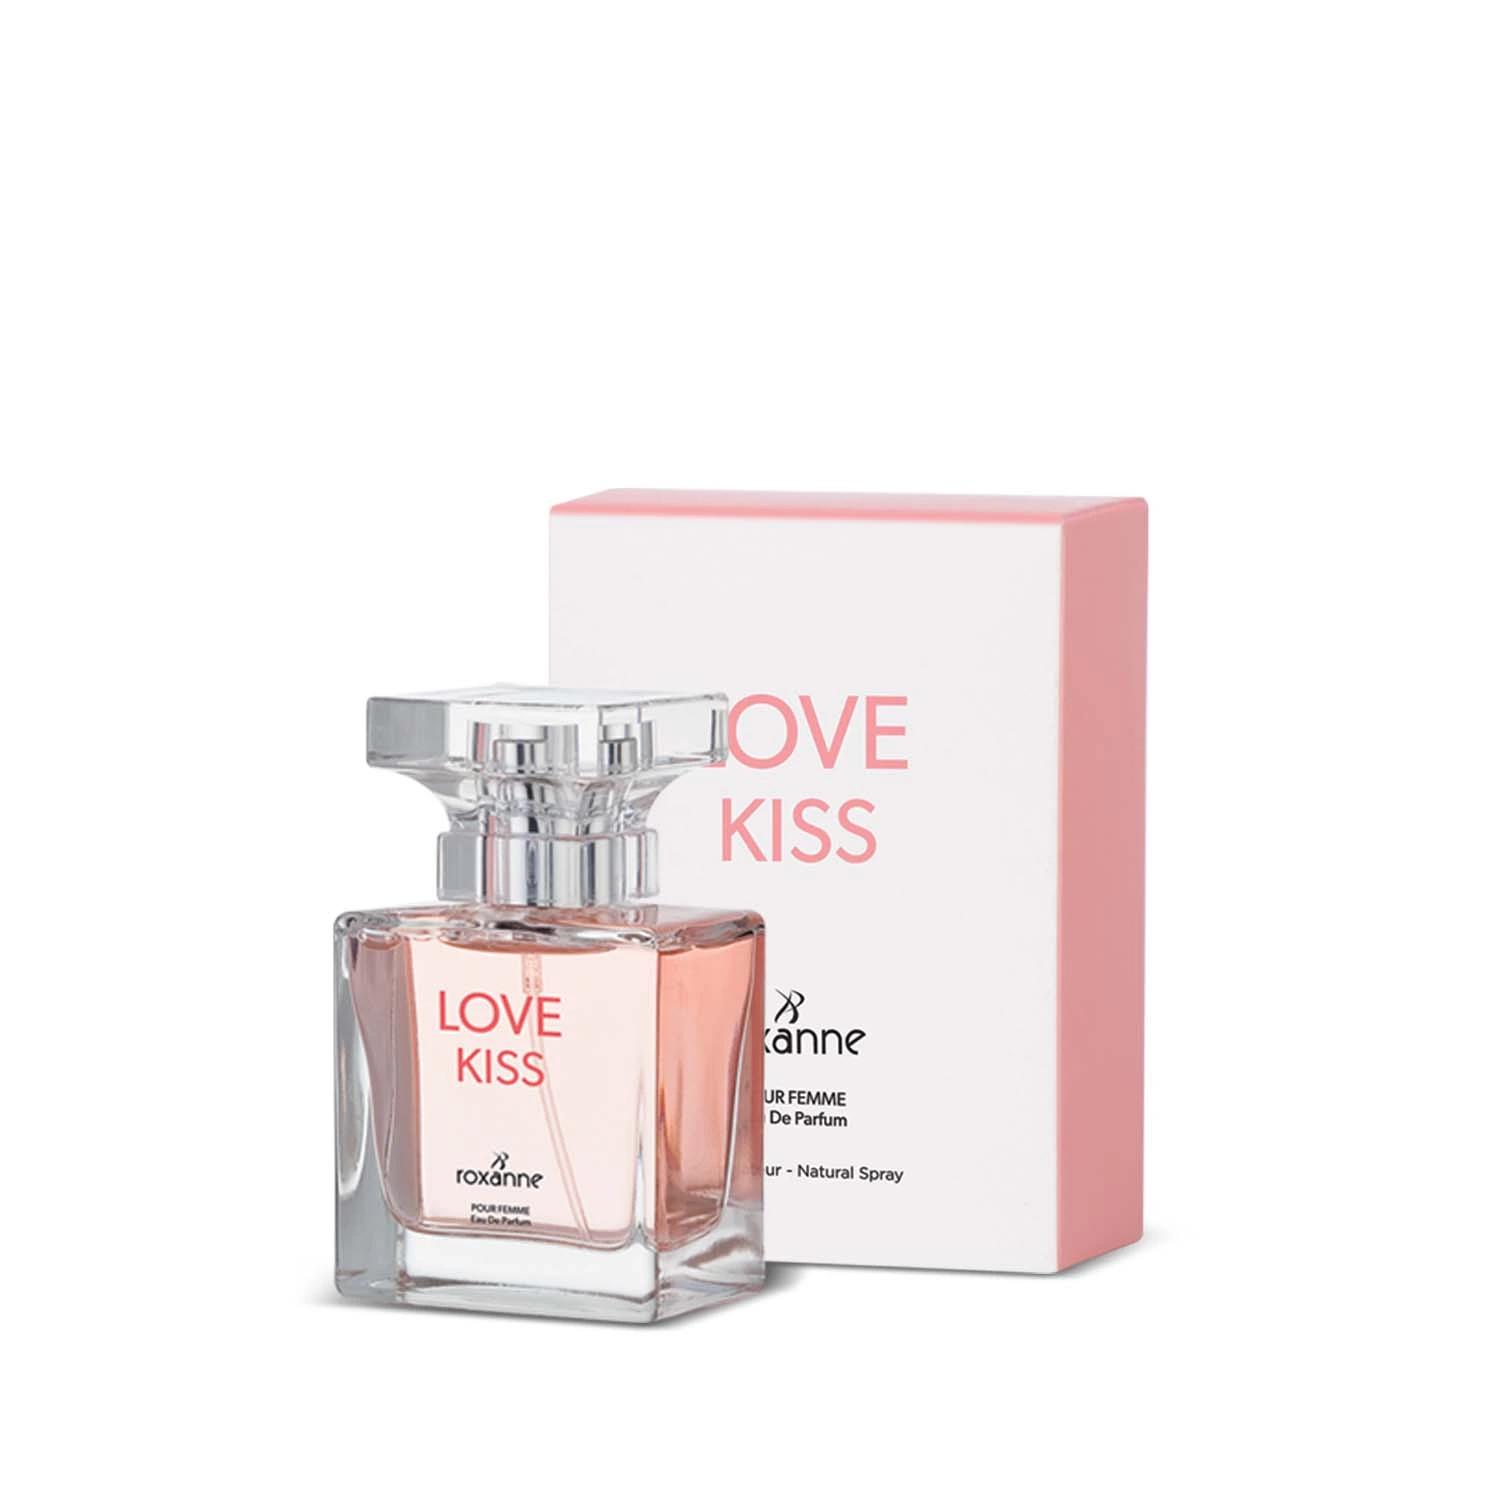 Roxanne Love Kiss Eau De parfum For Women 50 ML